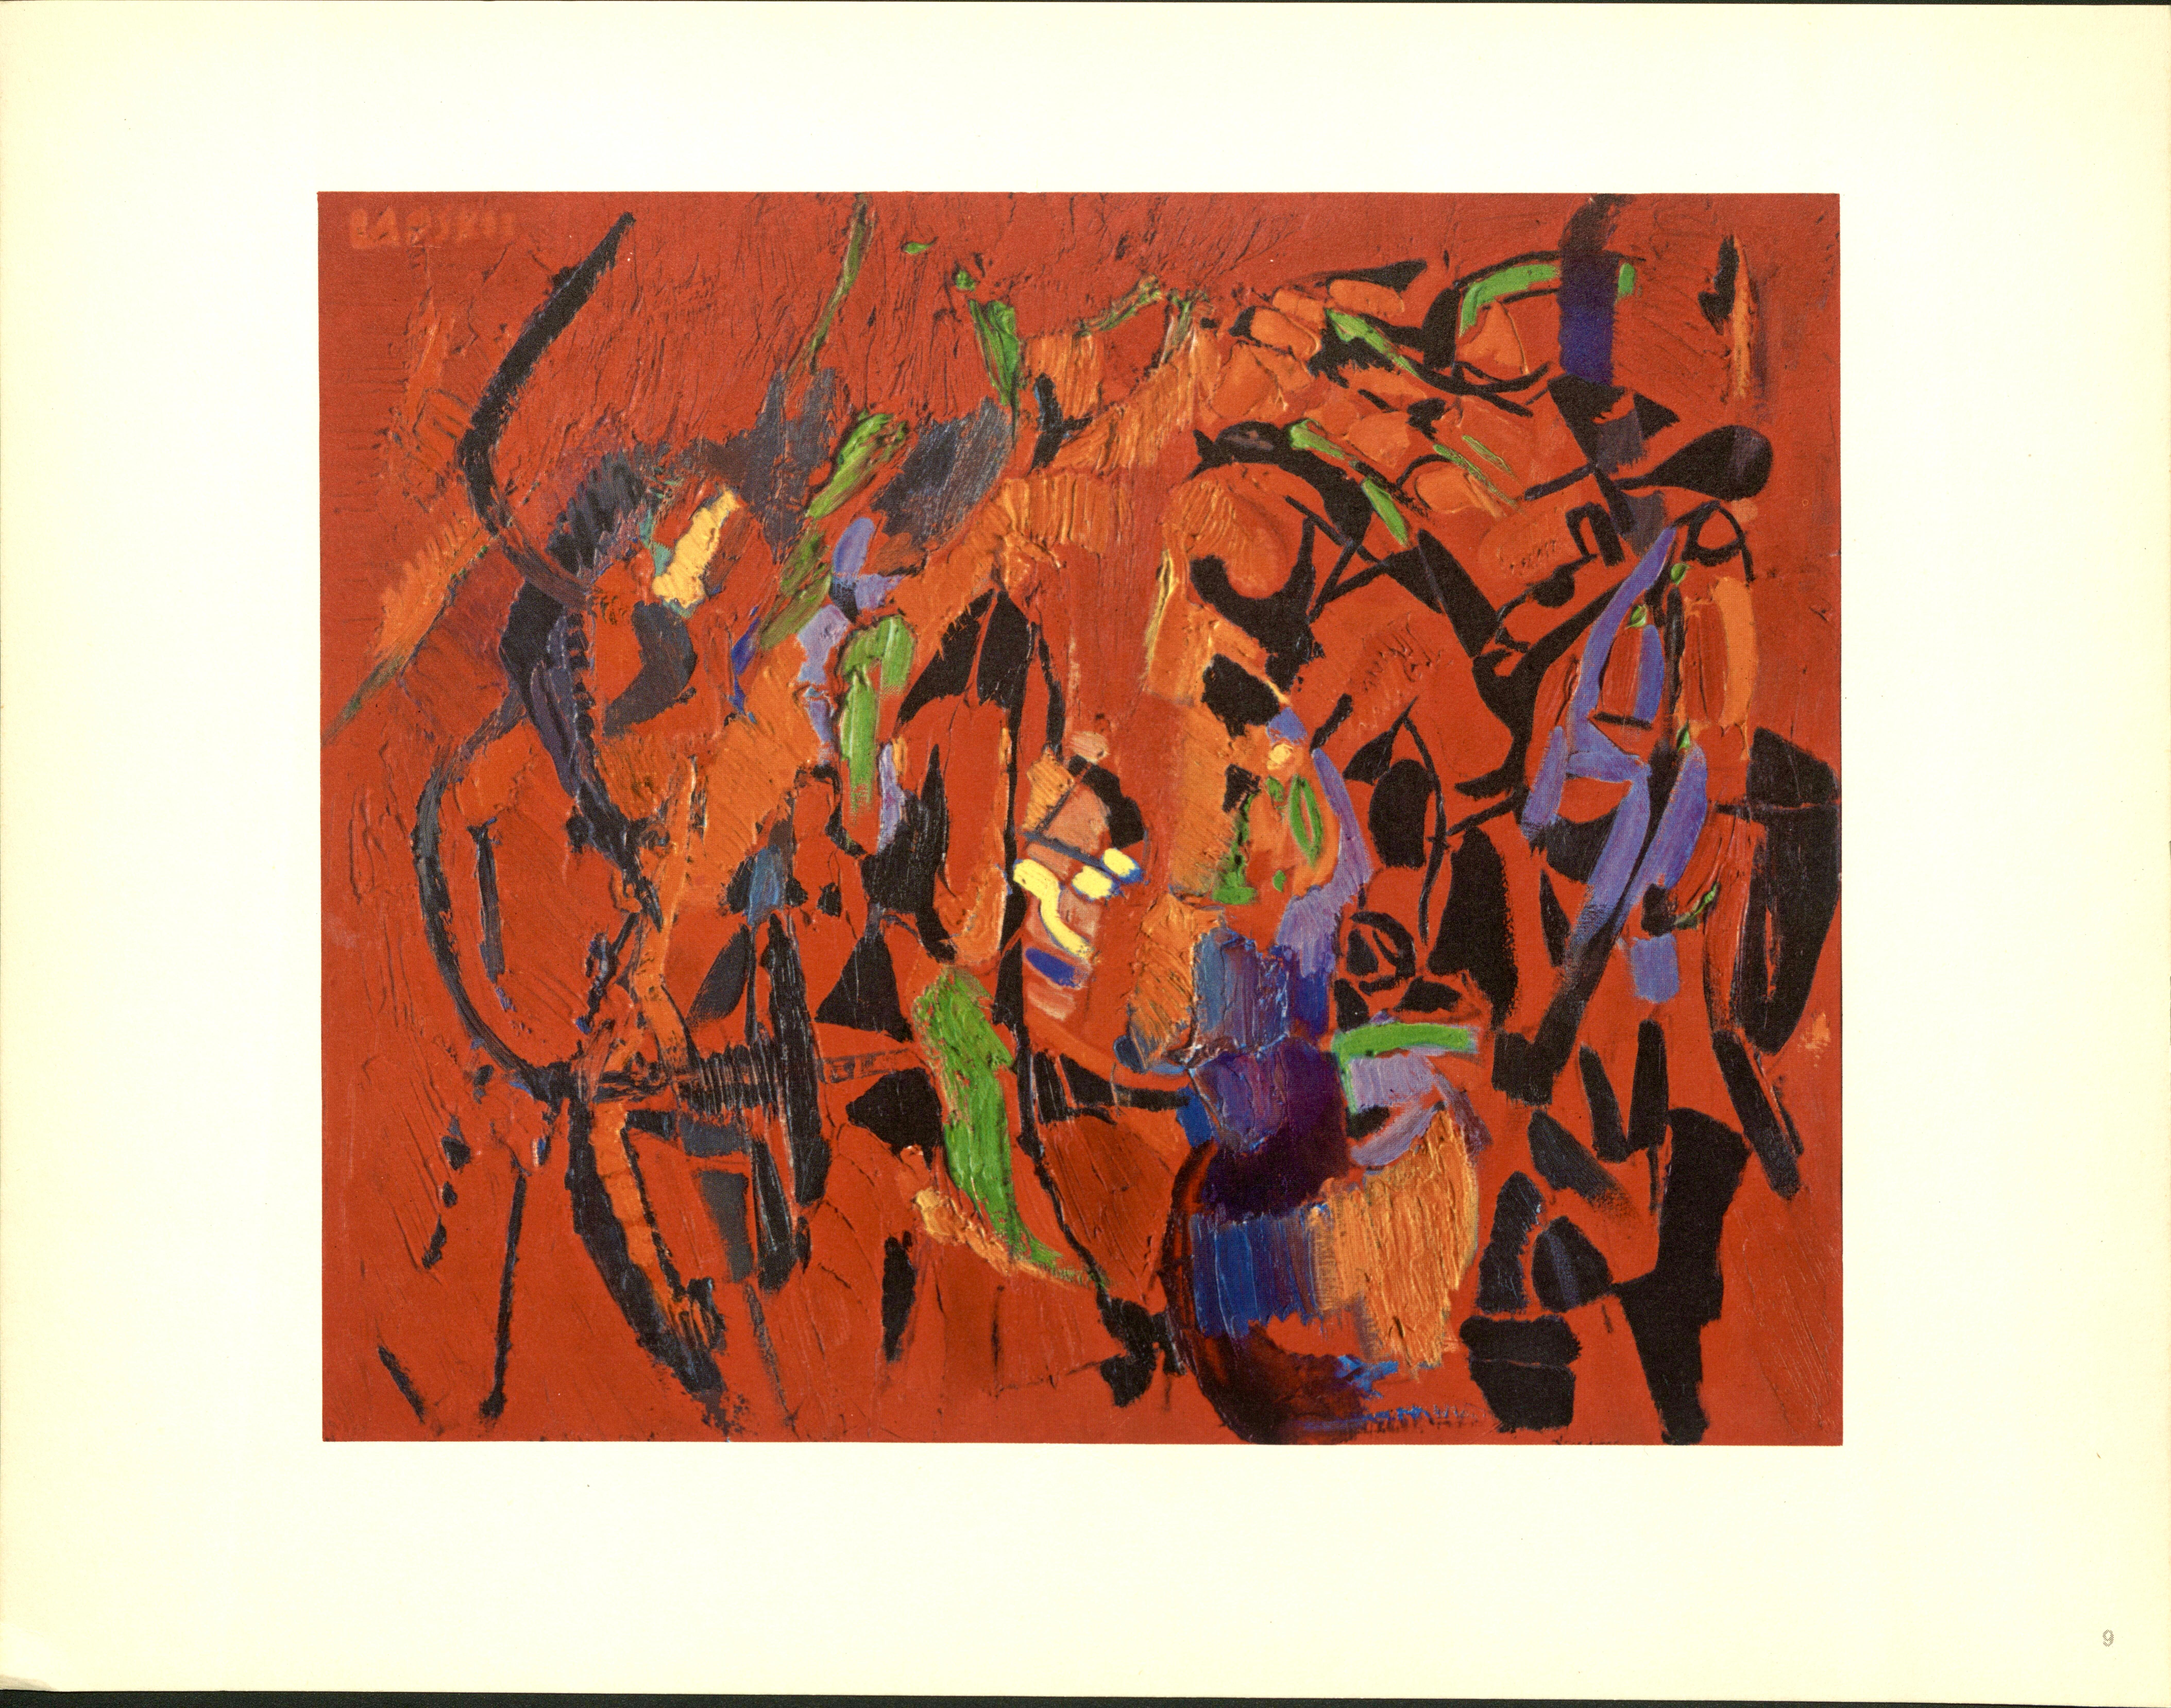 Lanskoy, Composition, André Lanskoy: Peintres d'aujourd'hui (after) For Sale 6